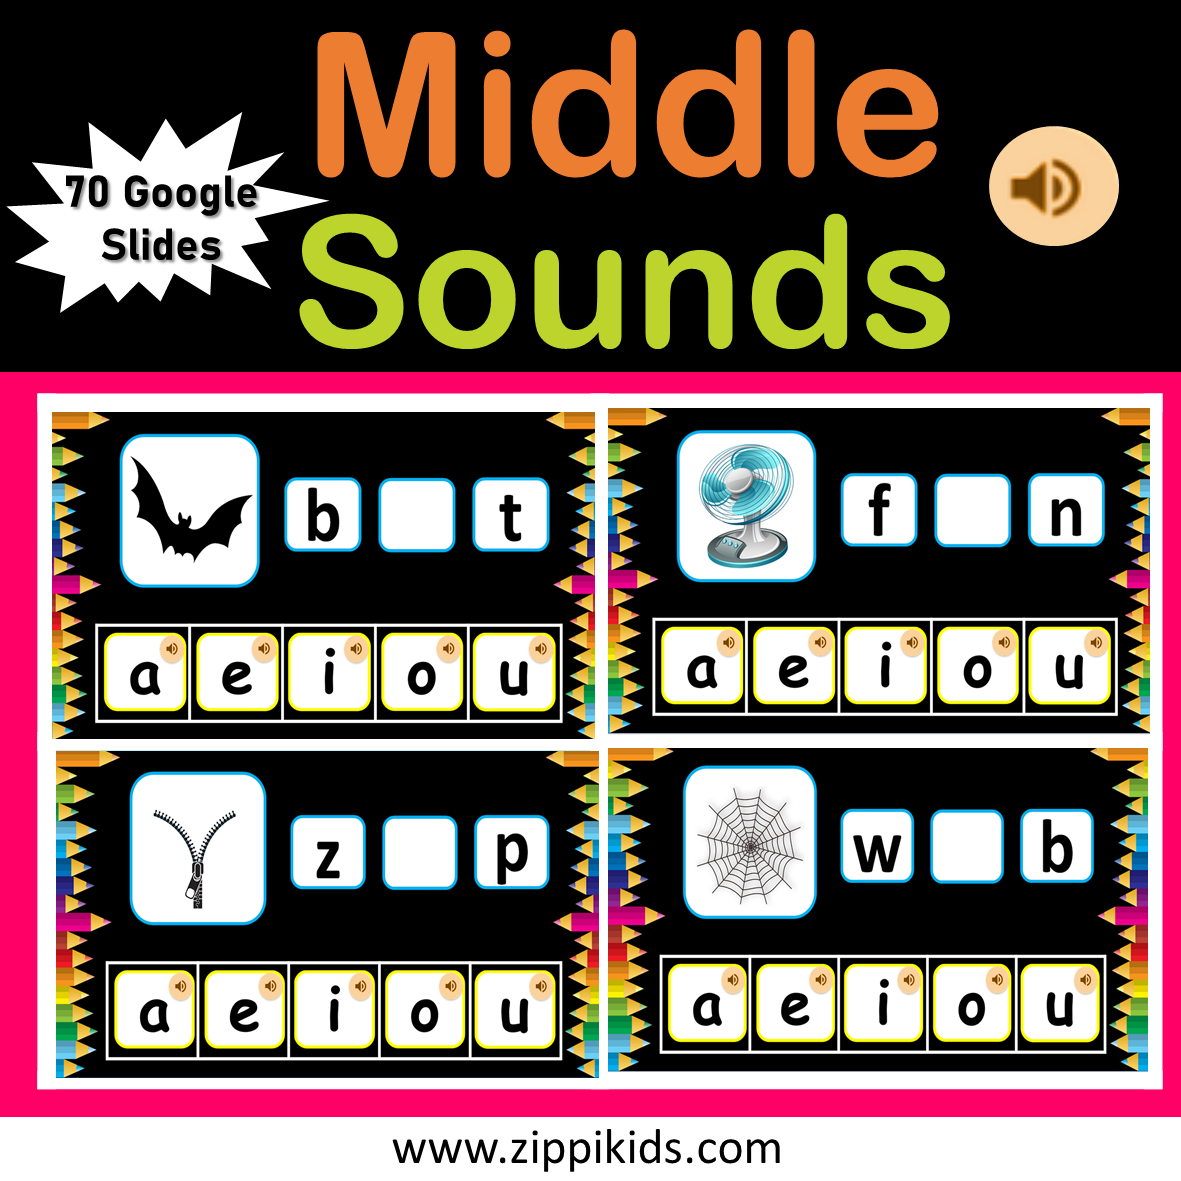 Middle Sounds with Audio, CVC Words - 70 Google Slides